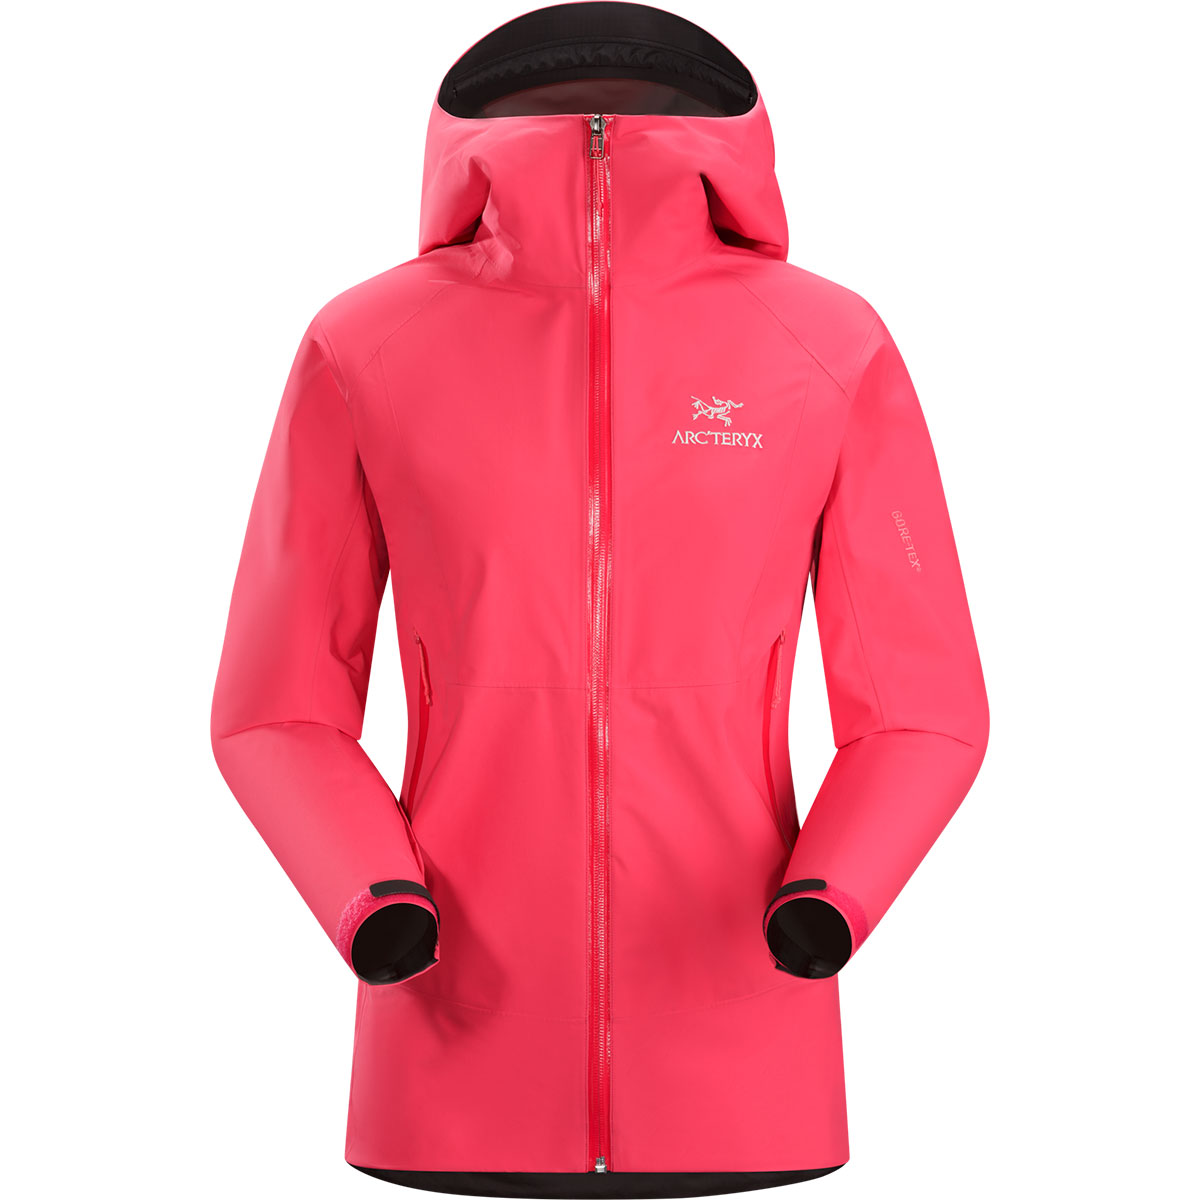 Arc'teryx Beta SL Jacket, women's, discontinued Fall 2016 colors (free ...